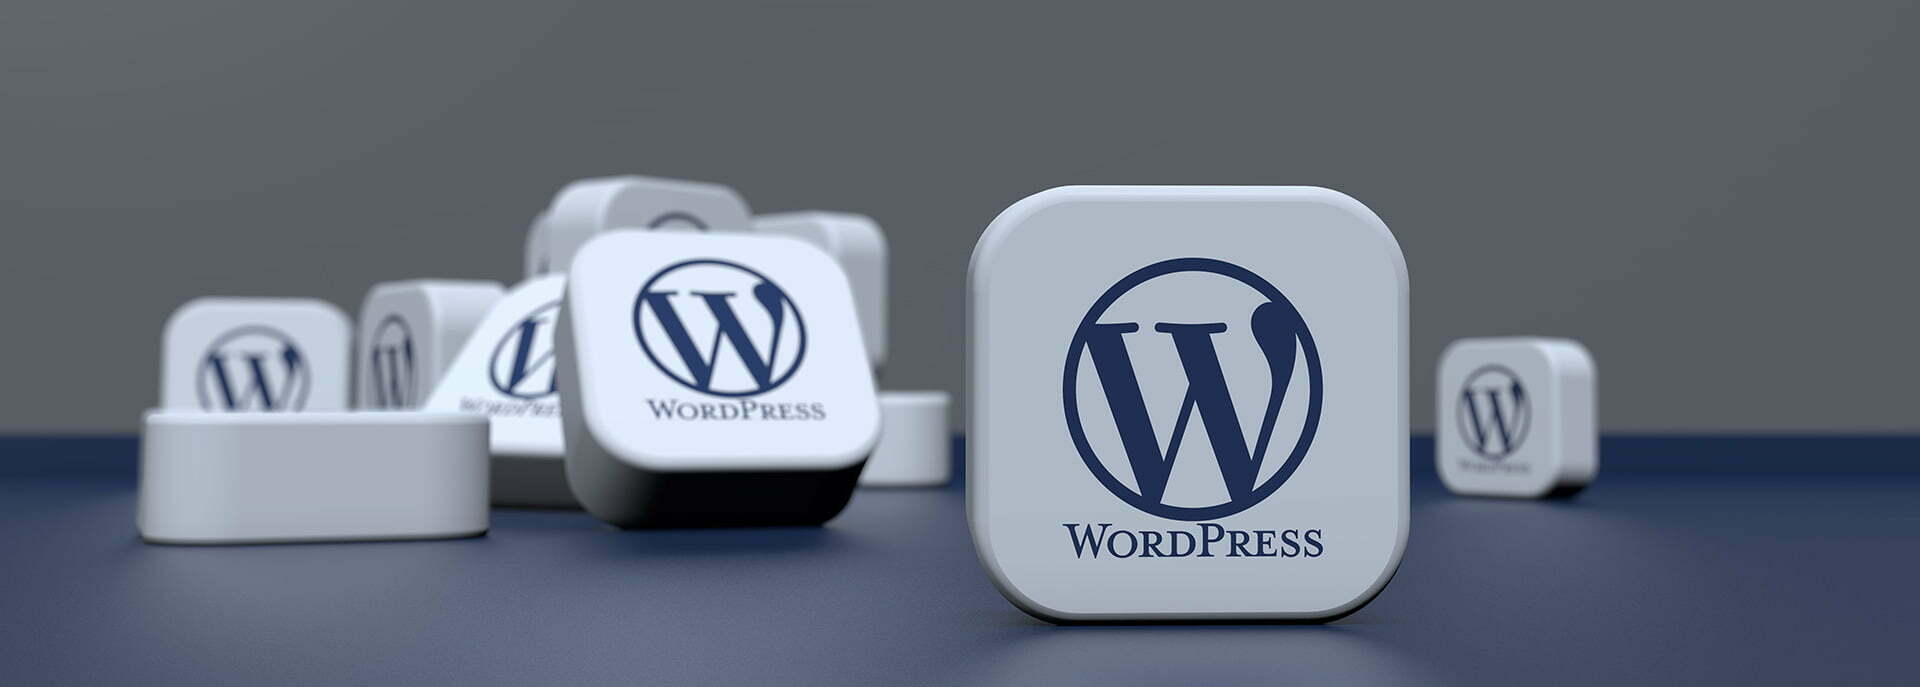 Formation WordPress et WooCommerce